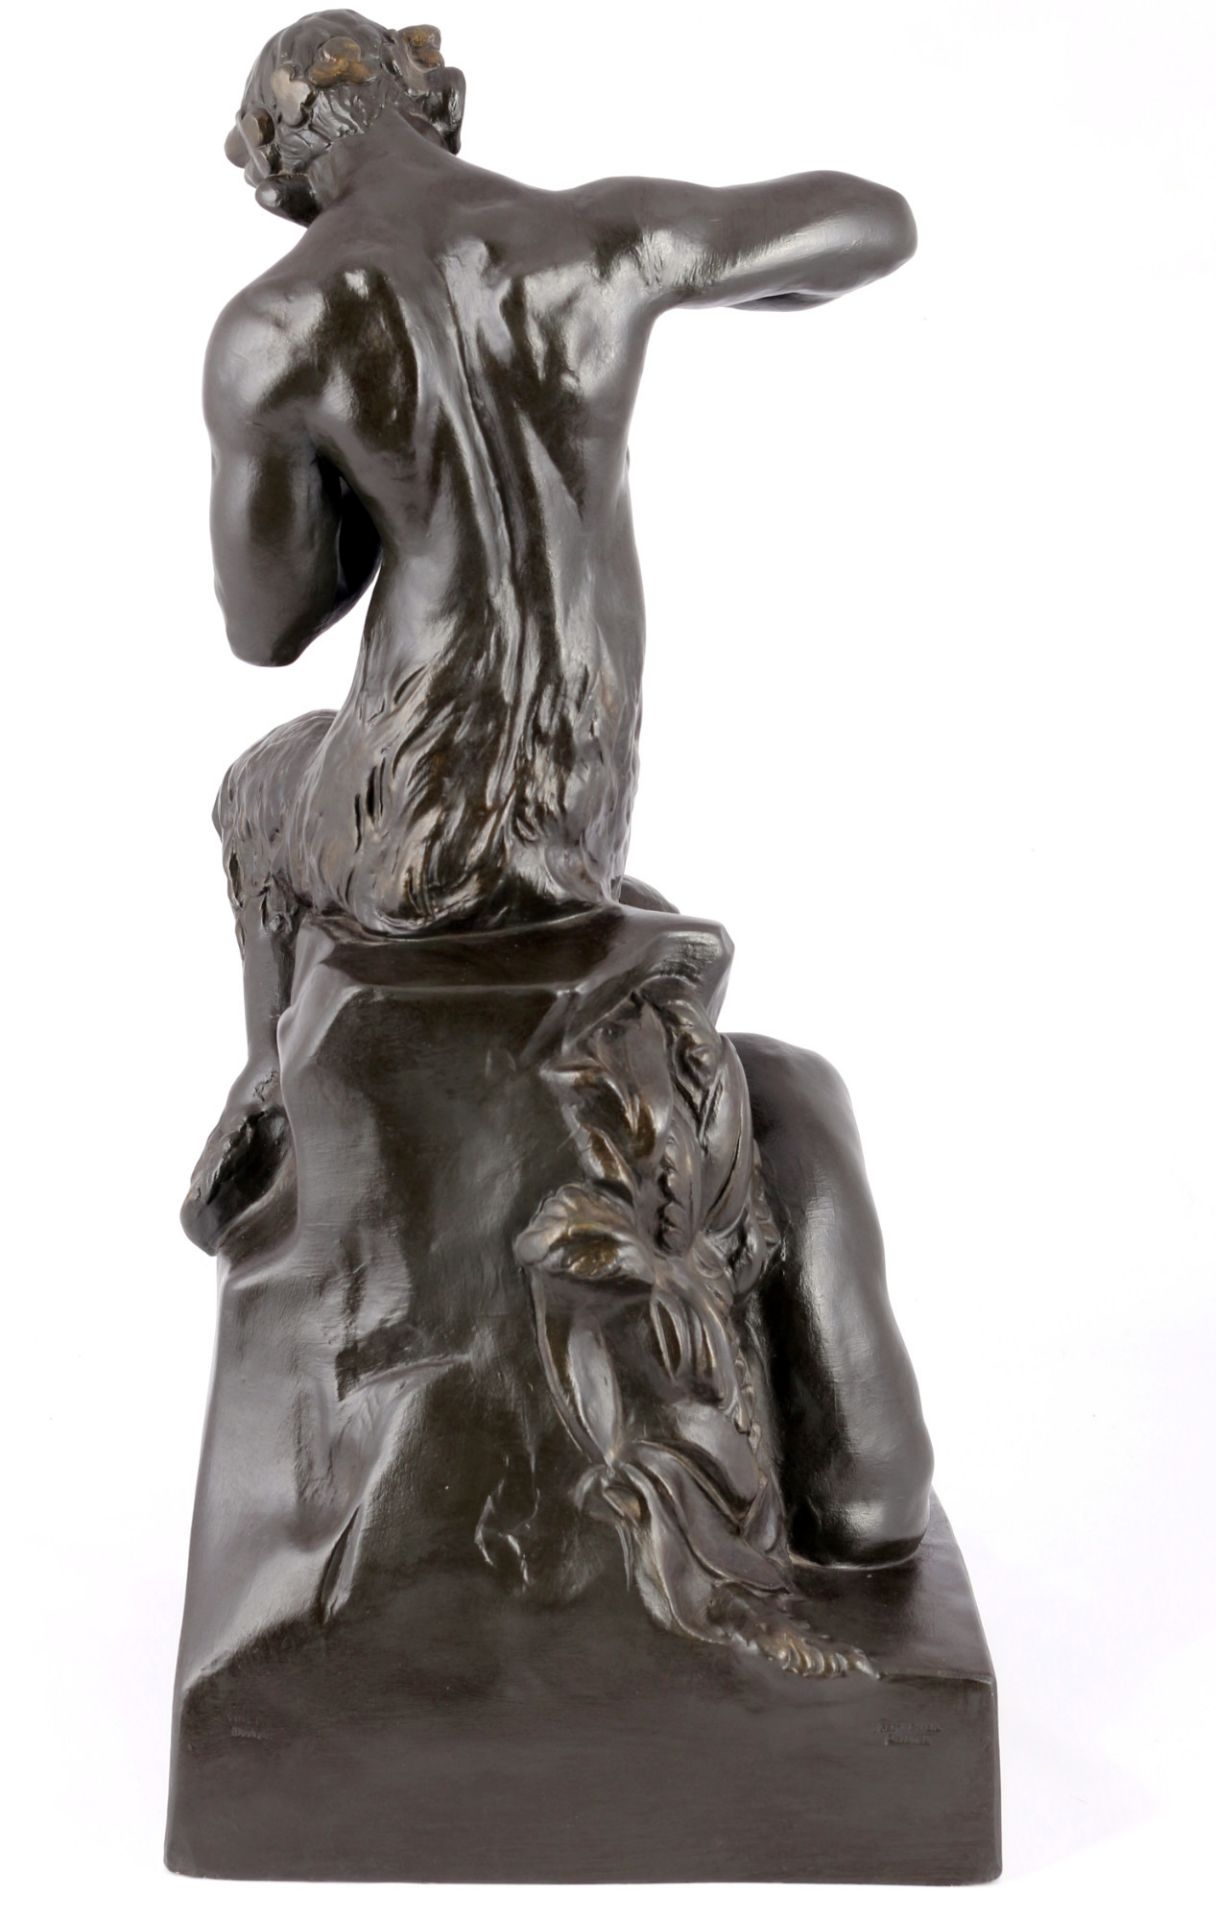 Pan und Syrinx große Keramikfigur, large ceramic figure Pan and Syrinx, - Bild 4 aus 6